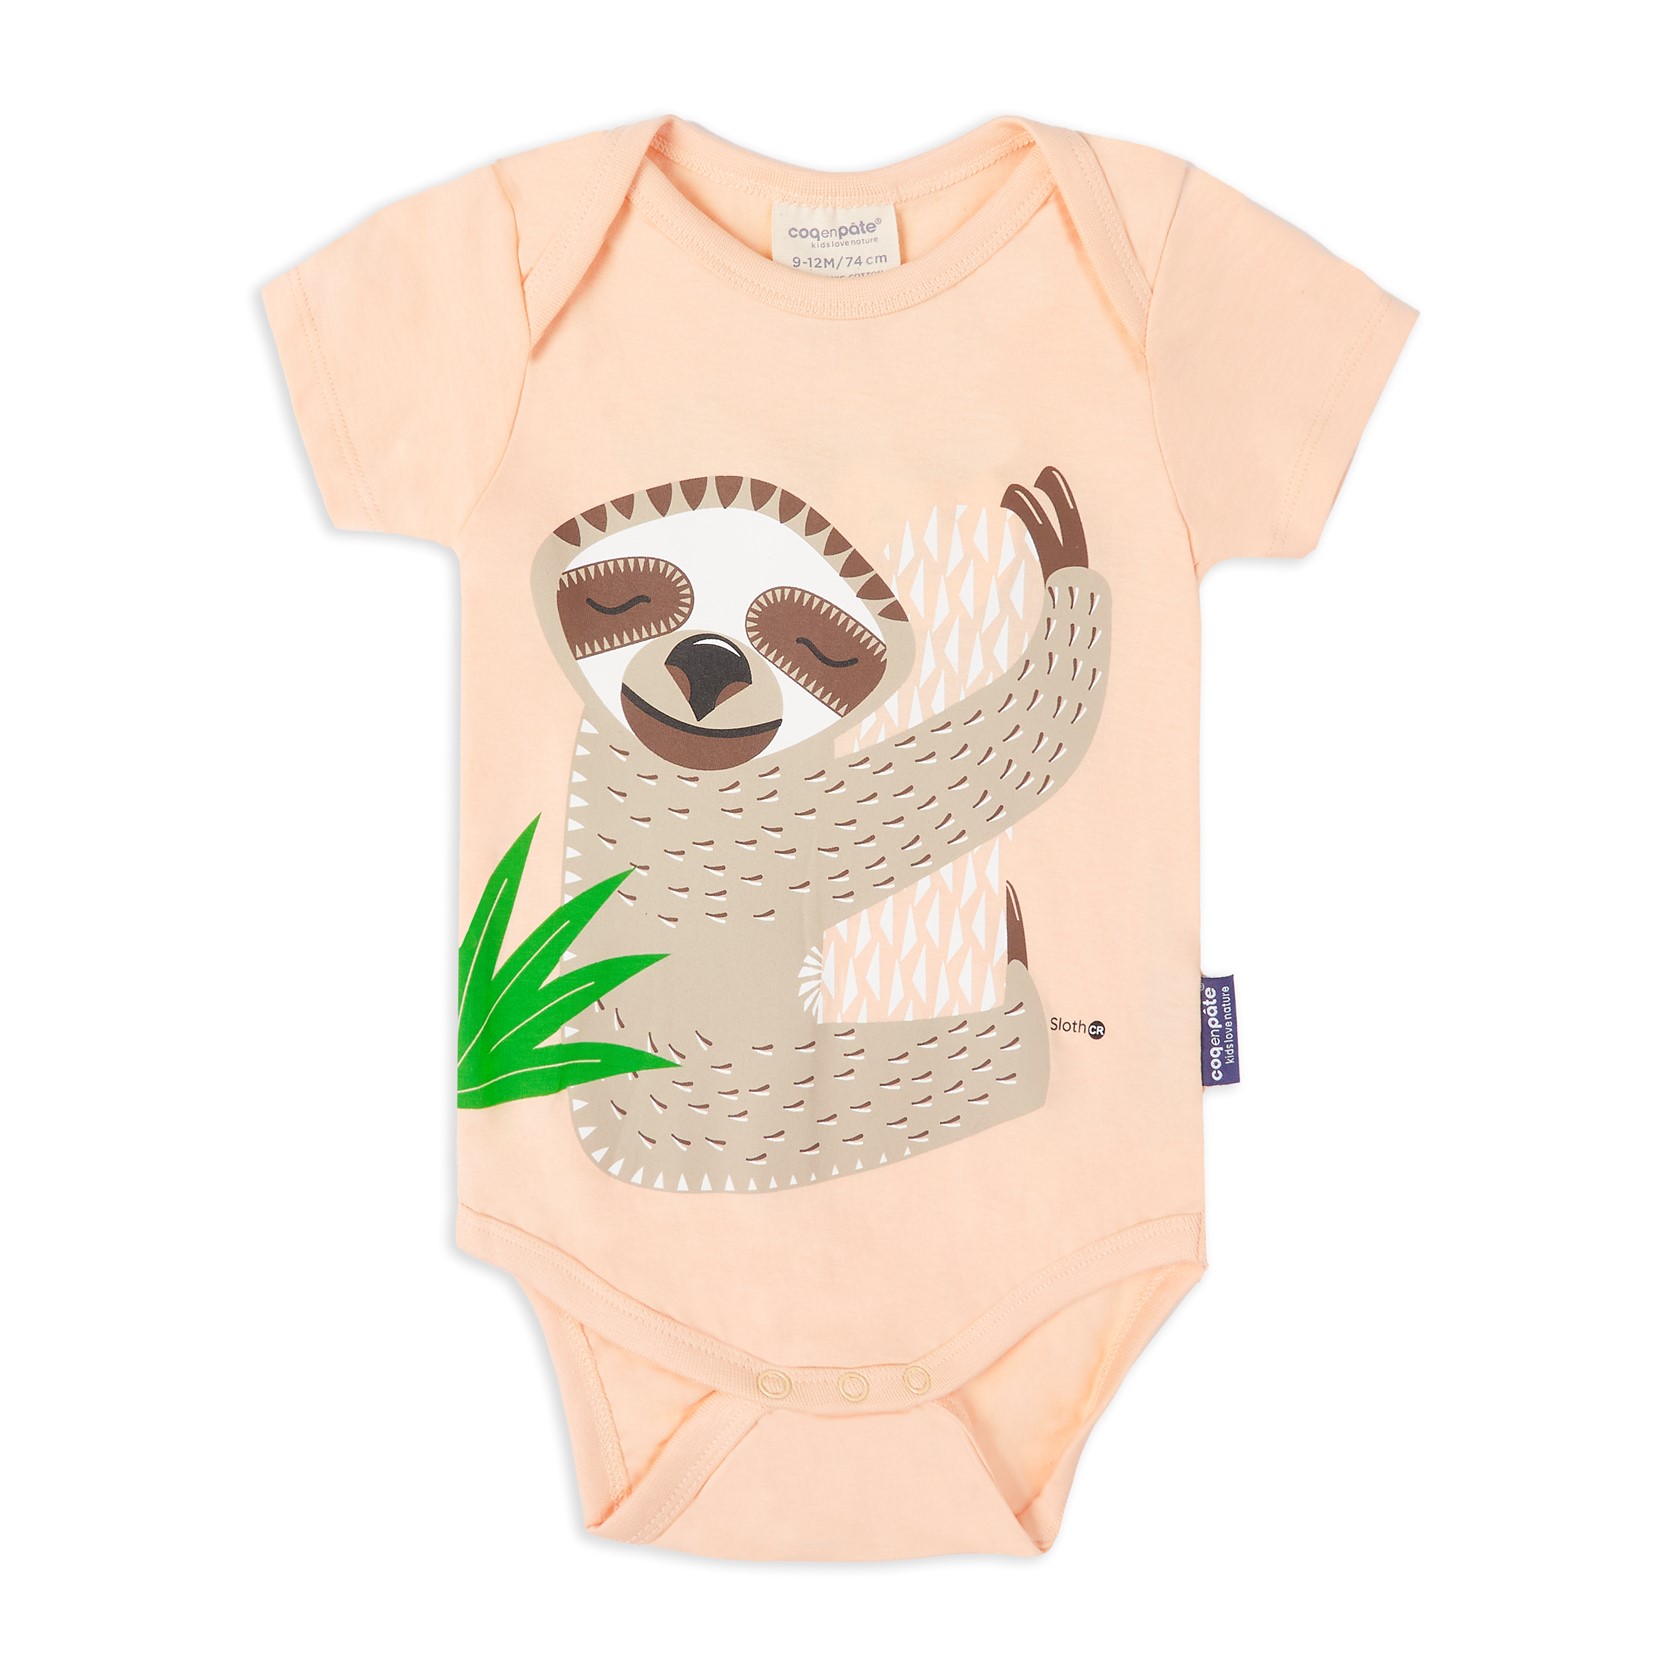 Coq en Pate Sloth Baby Bodysuit